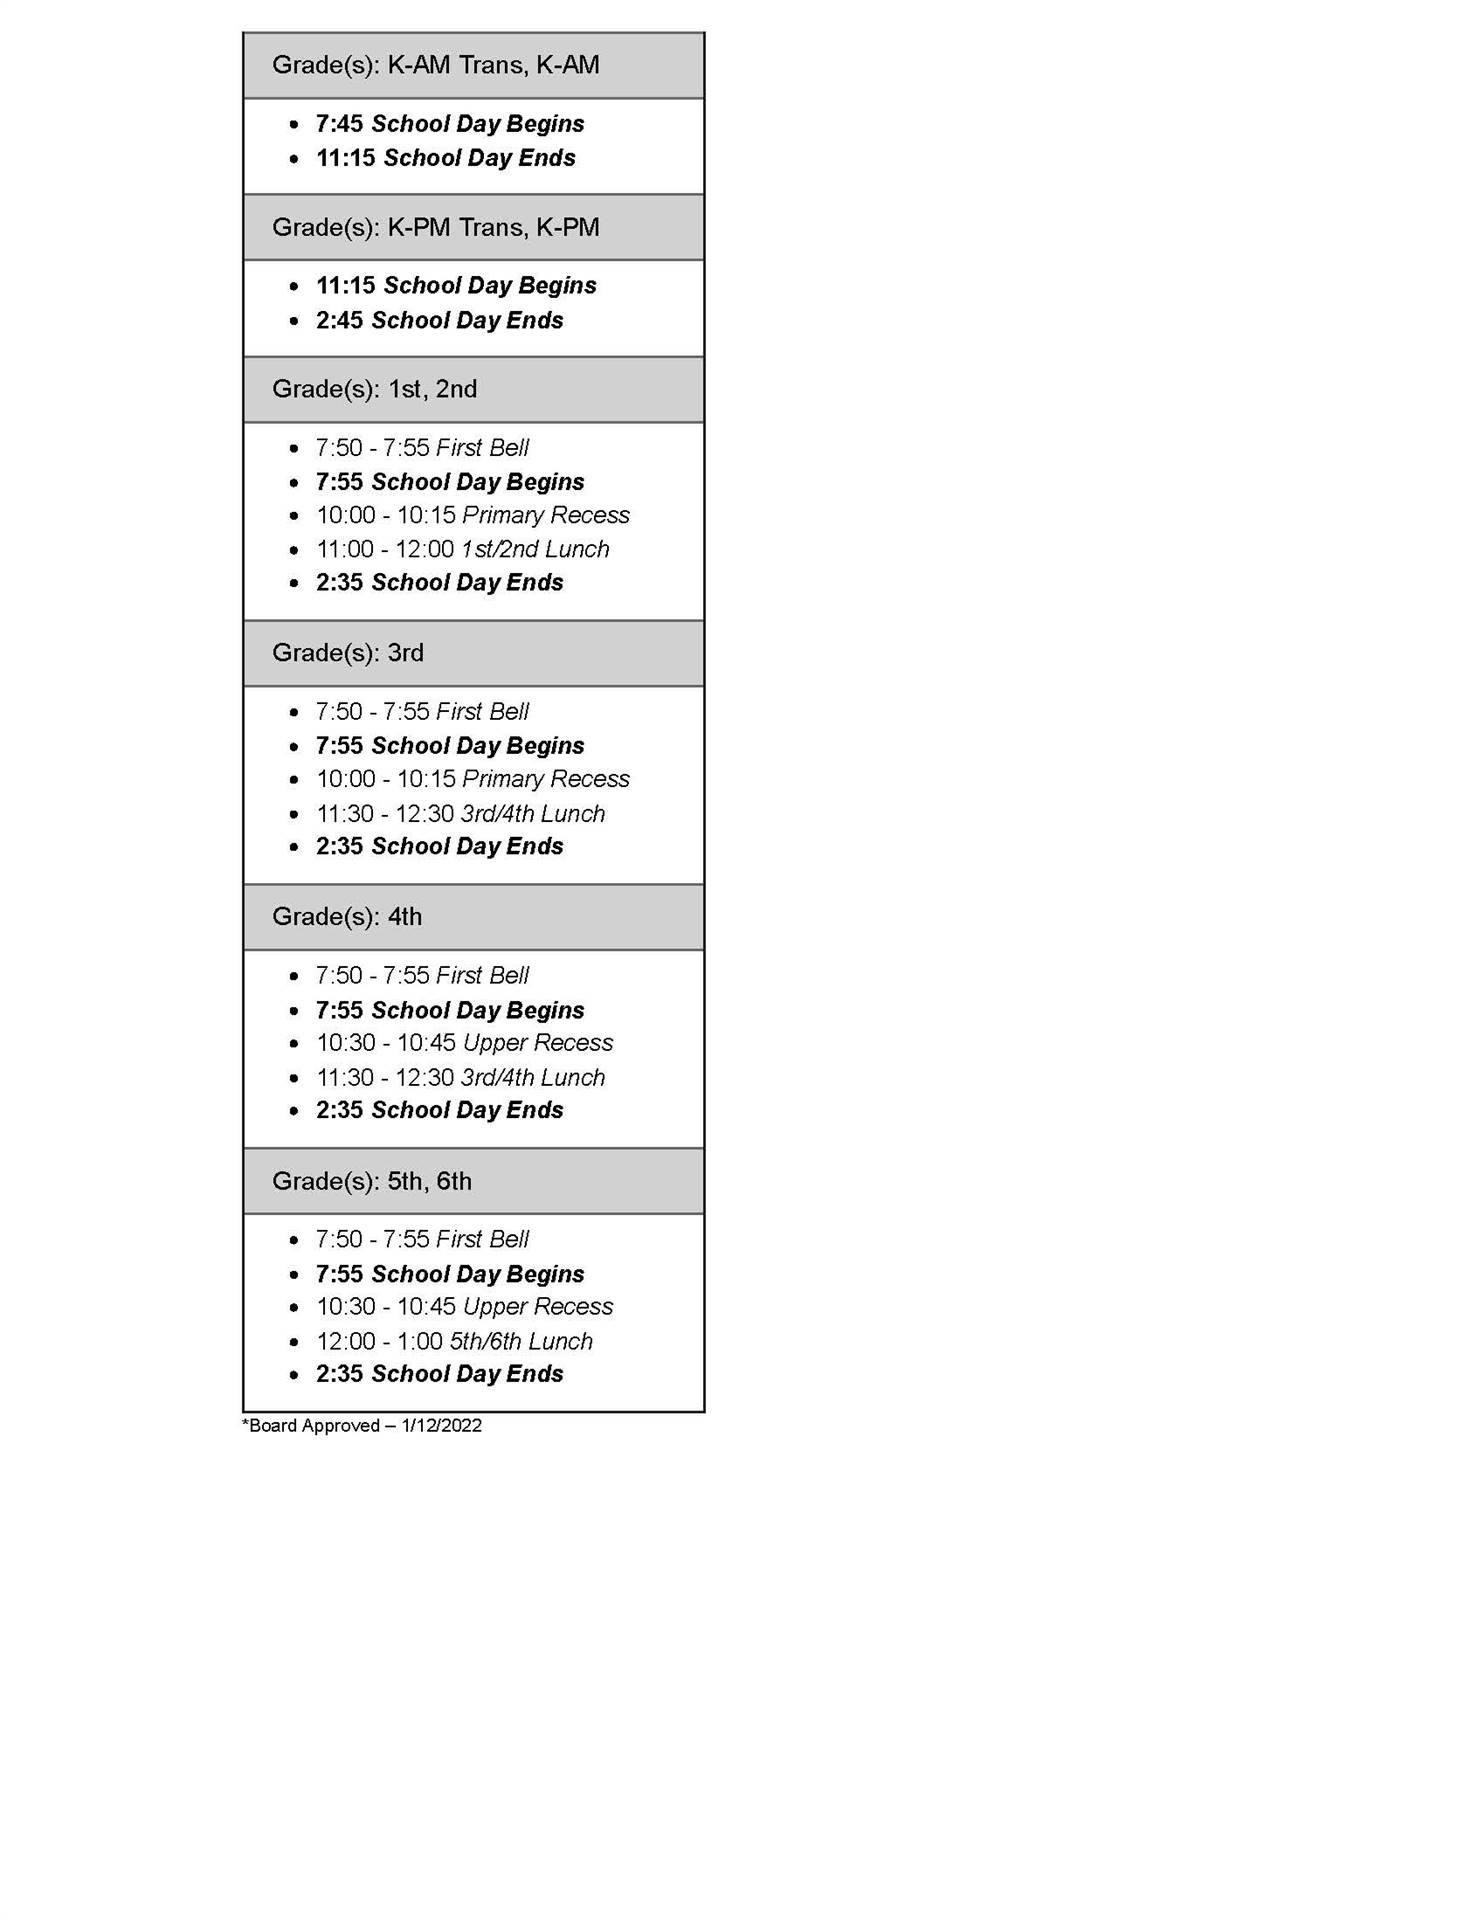 CHS Area Bell Schedule - full text downloadable below